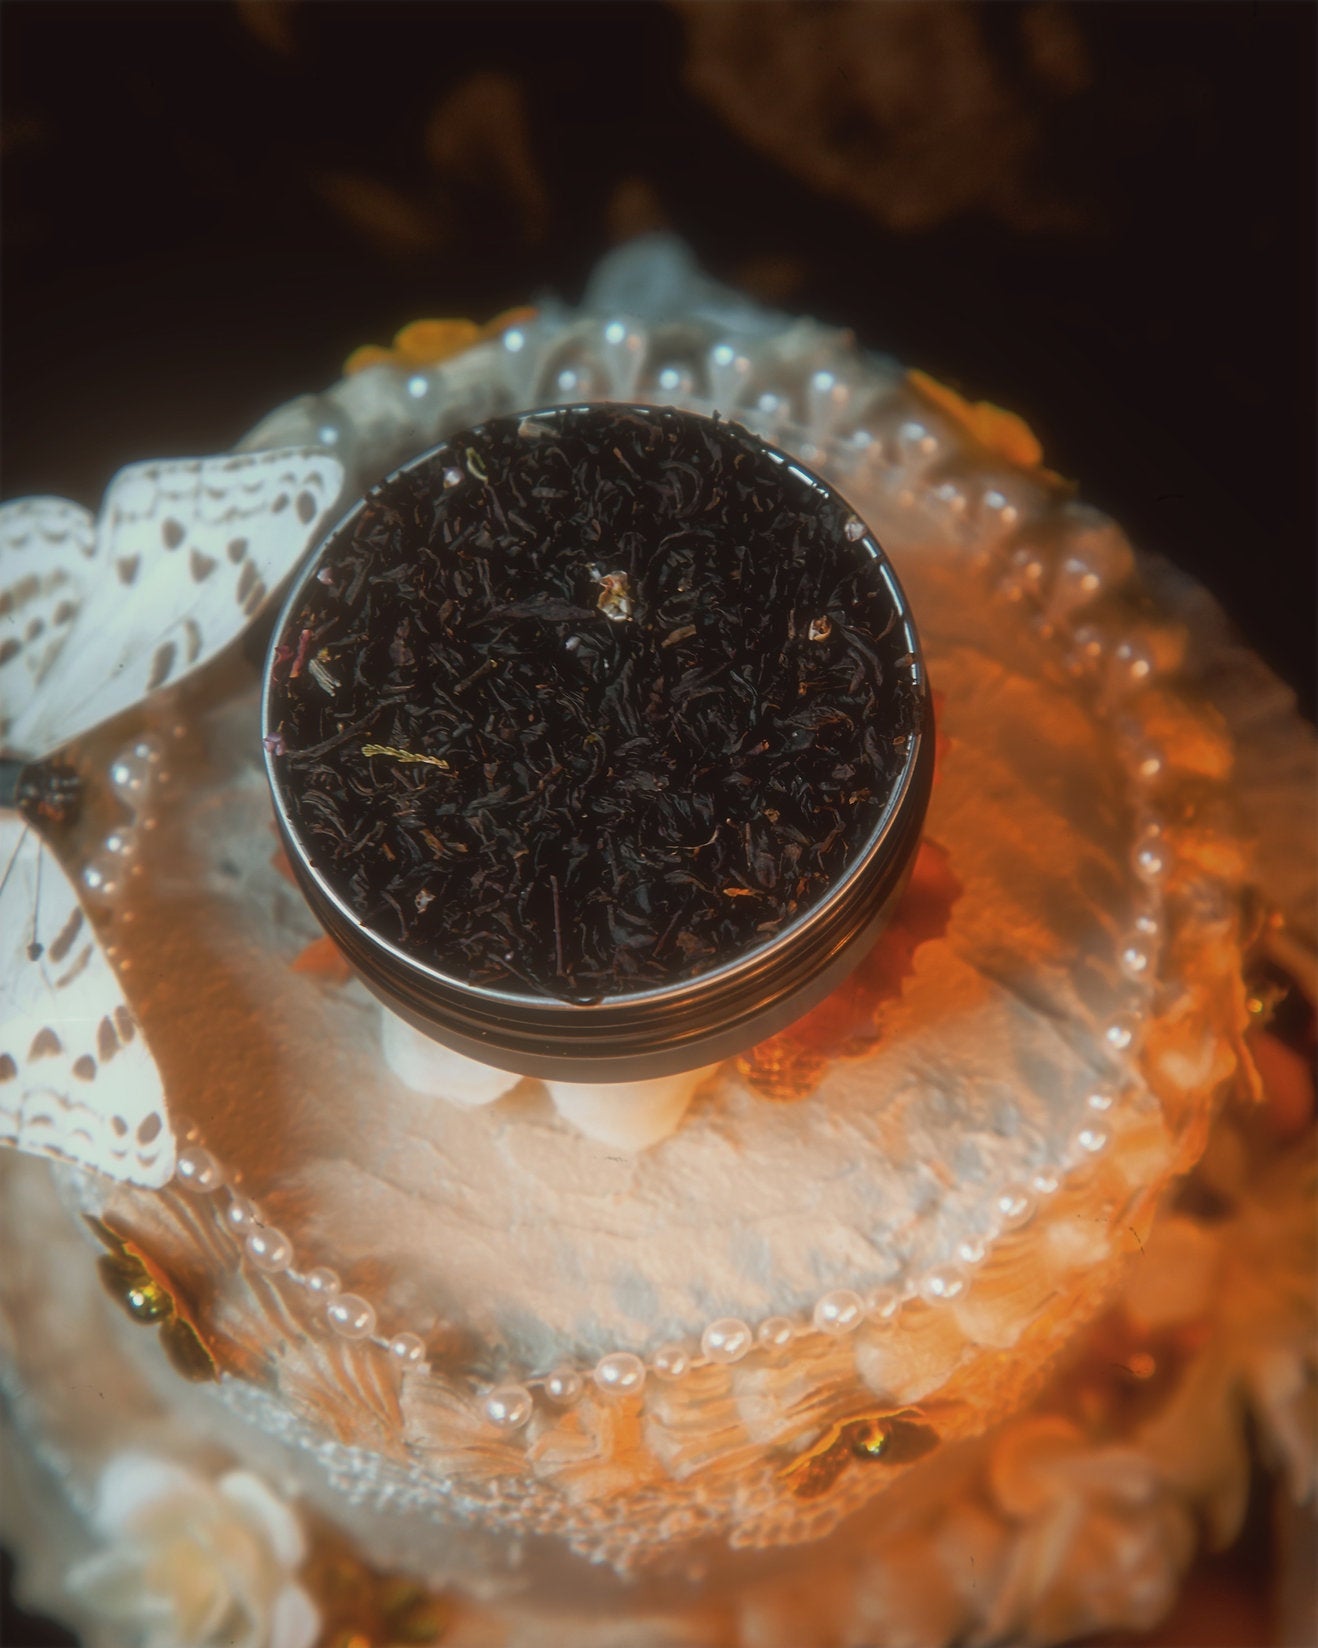 The “Attic” Tea Blend